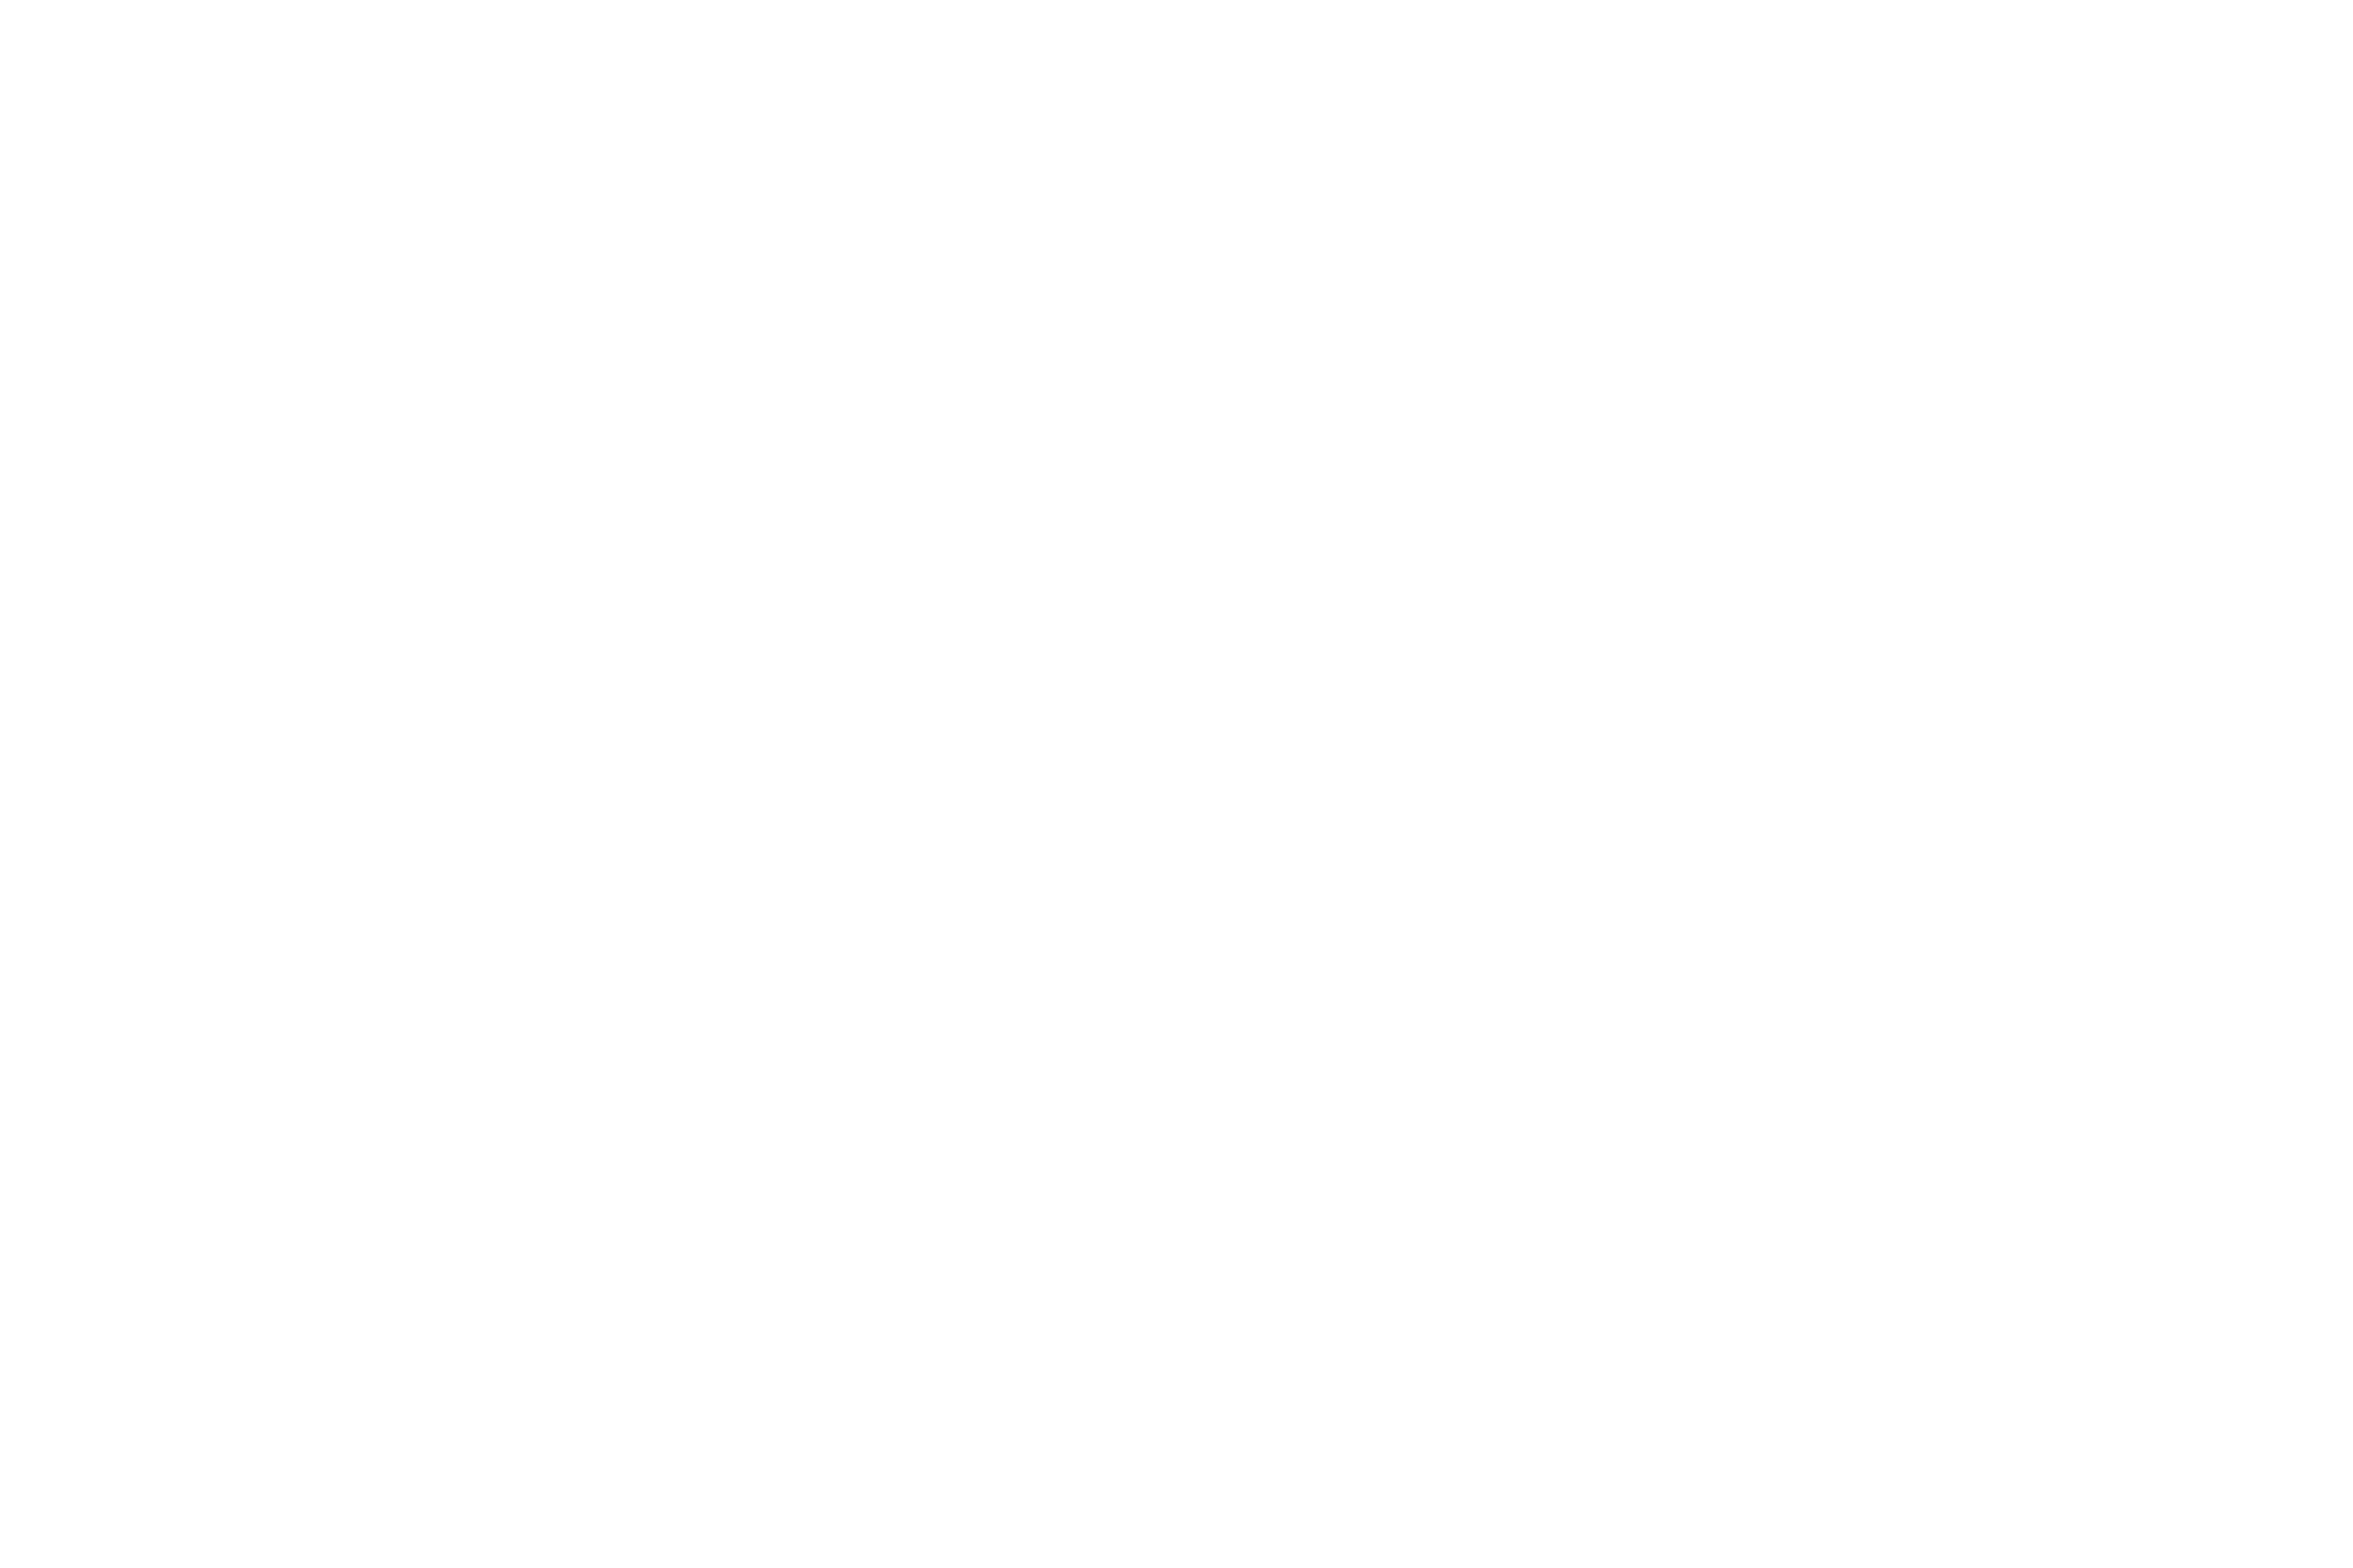 Ark logo in white